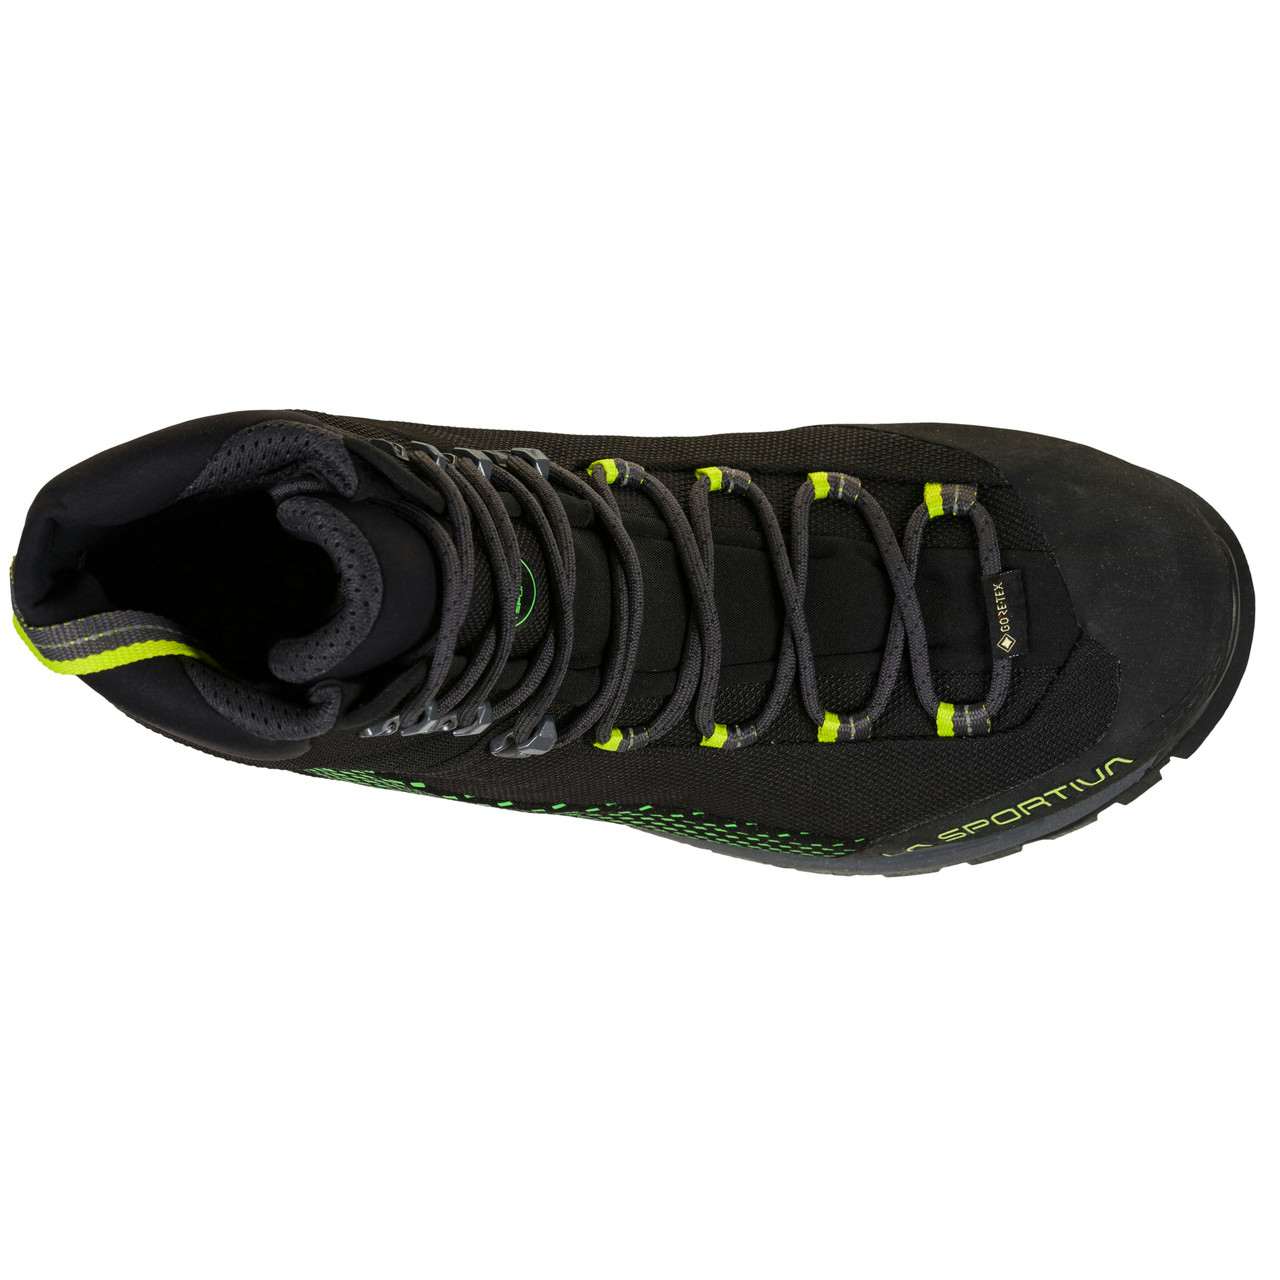 Chaussures de courte randonnée Trango TRK GTX Noir/Vert vif